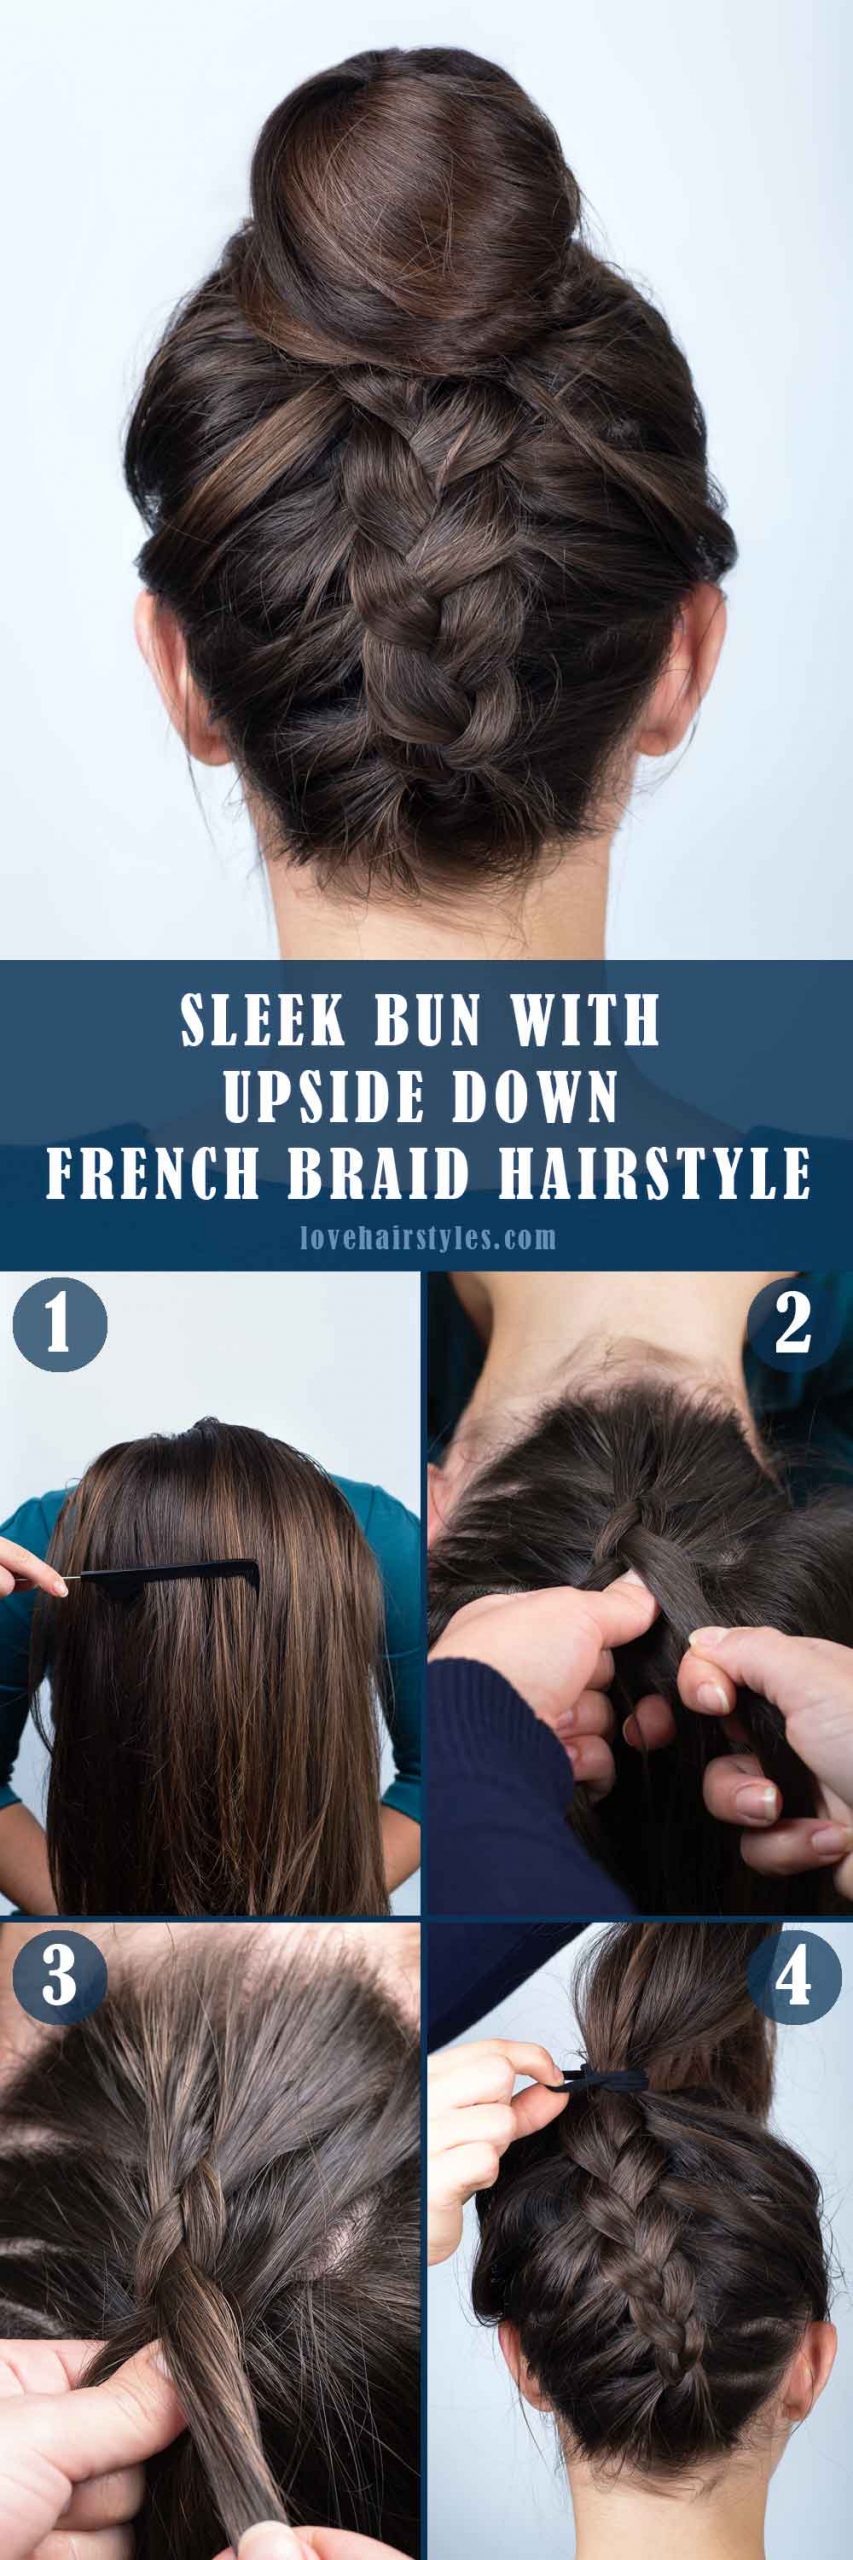 Sleek Bun With Upside Down French Braid